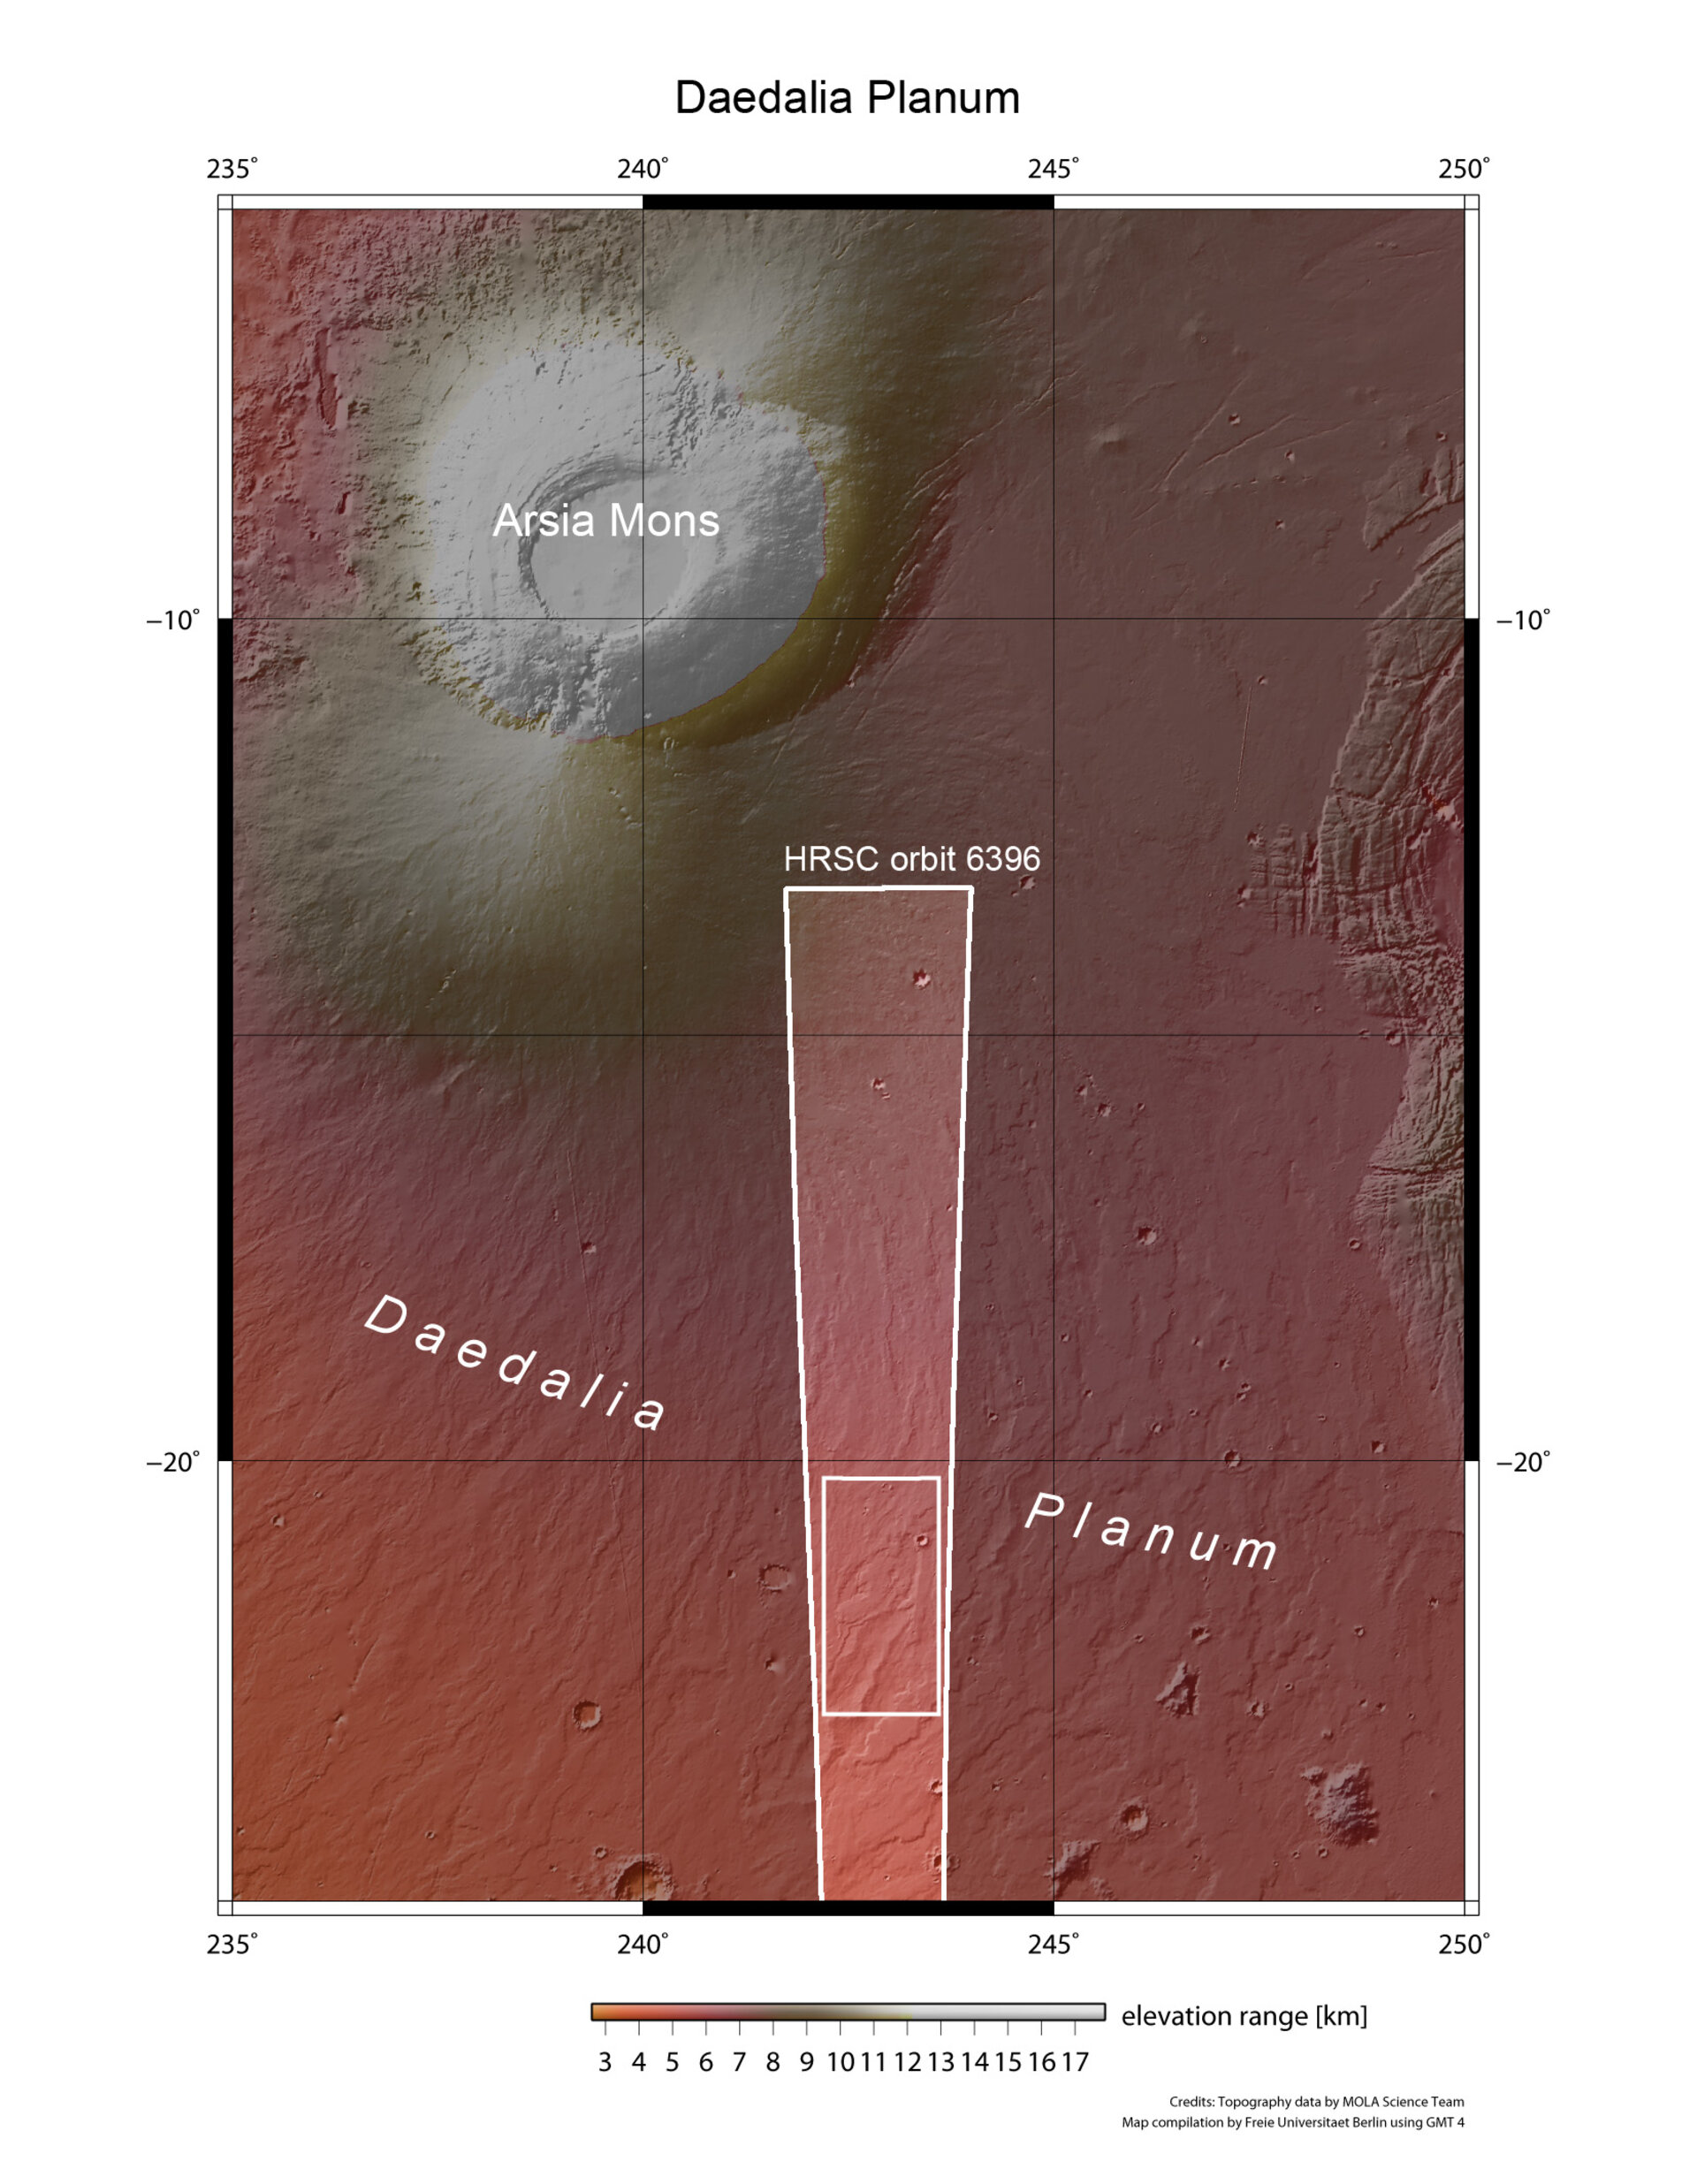 Daedalia Planum context map